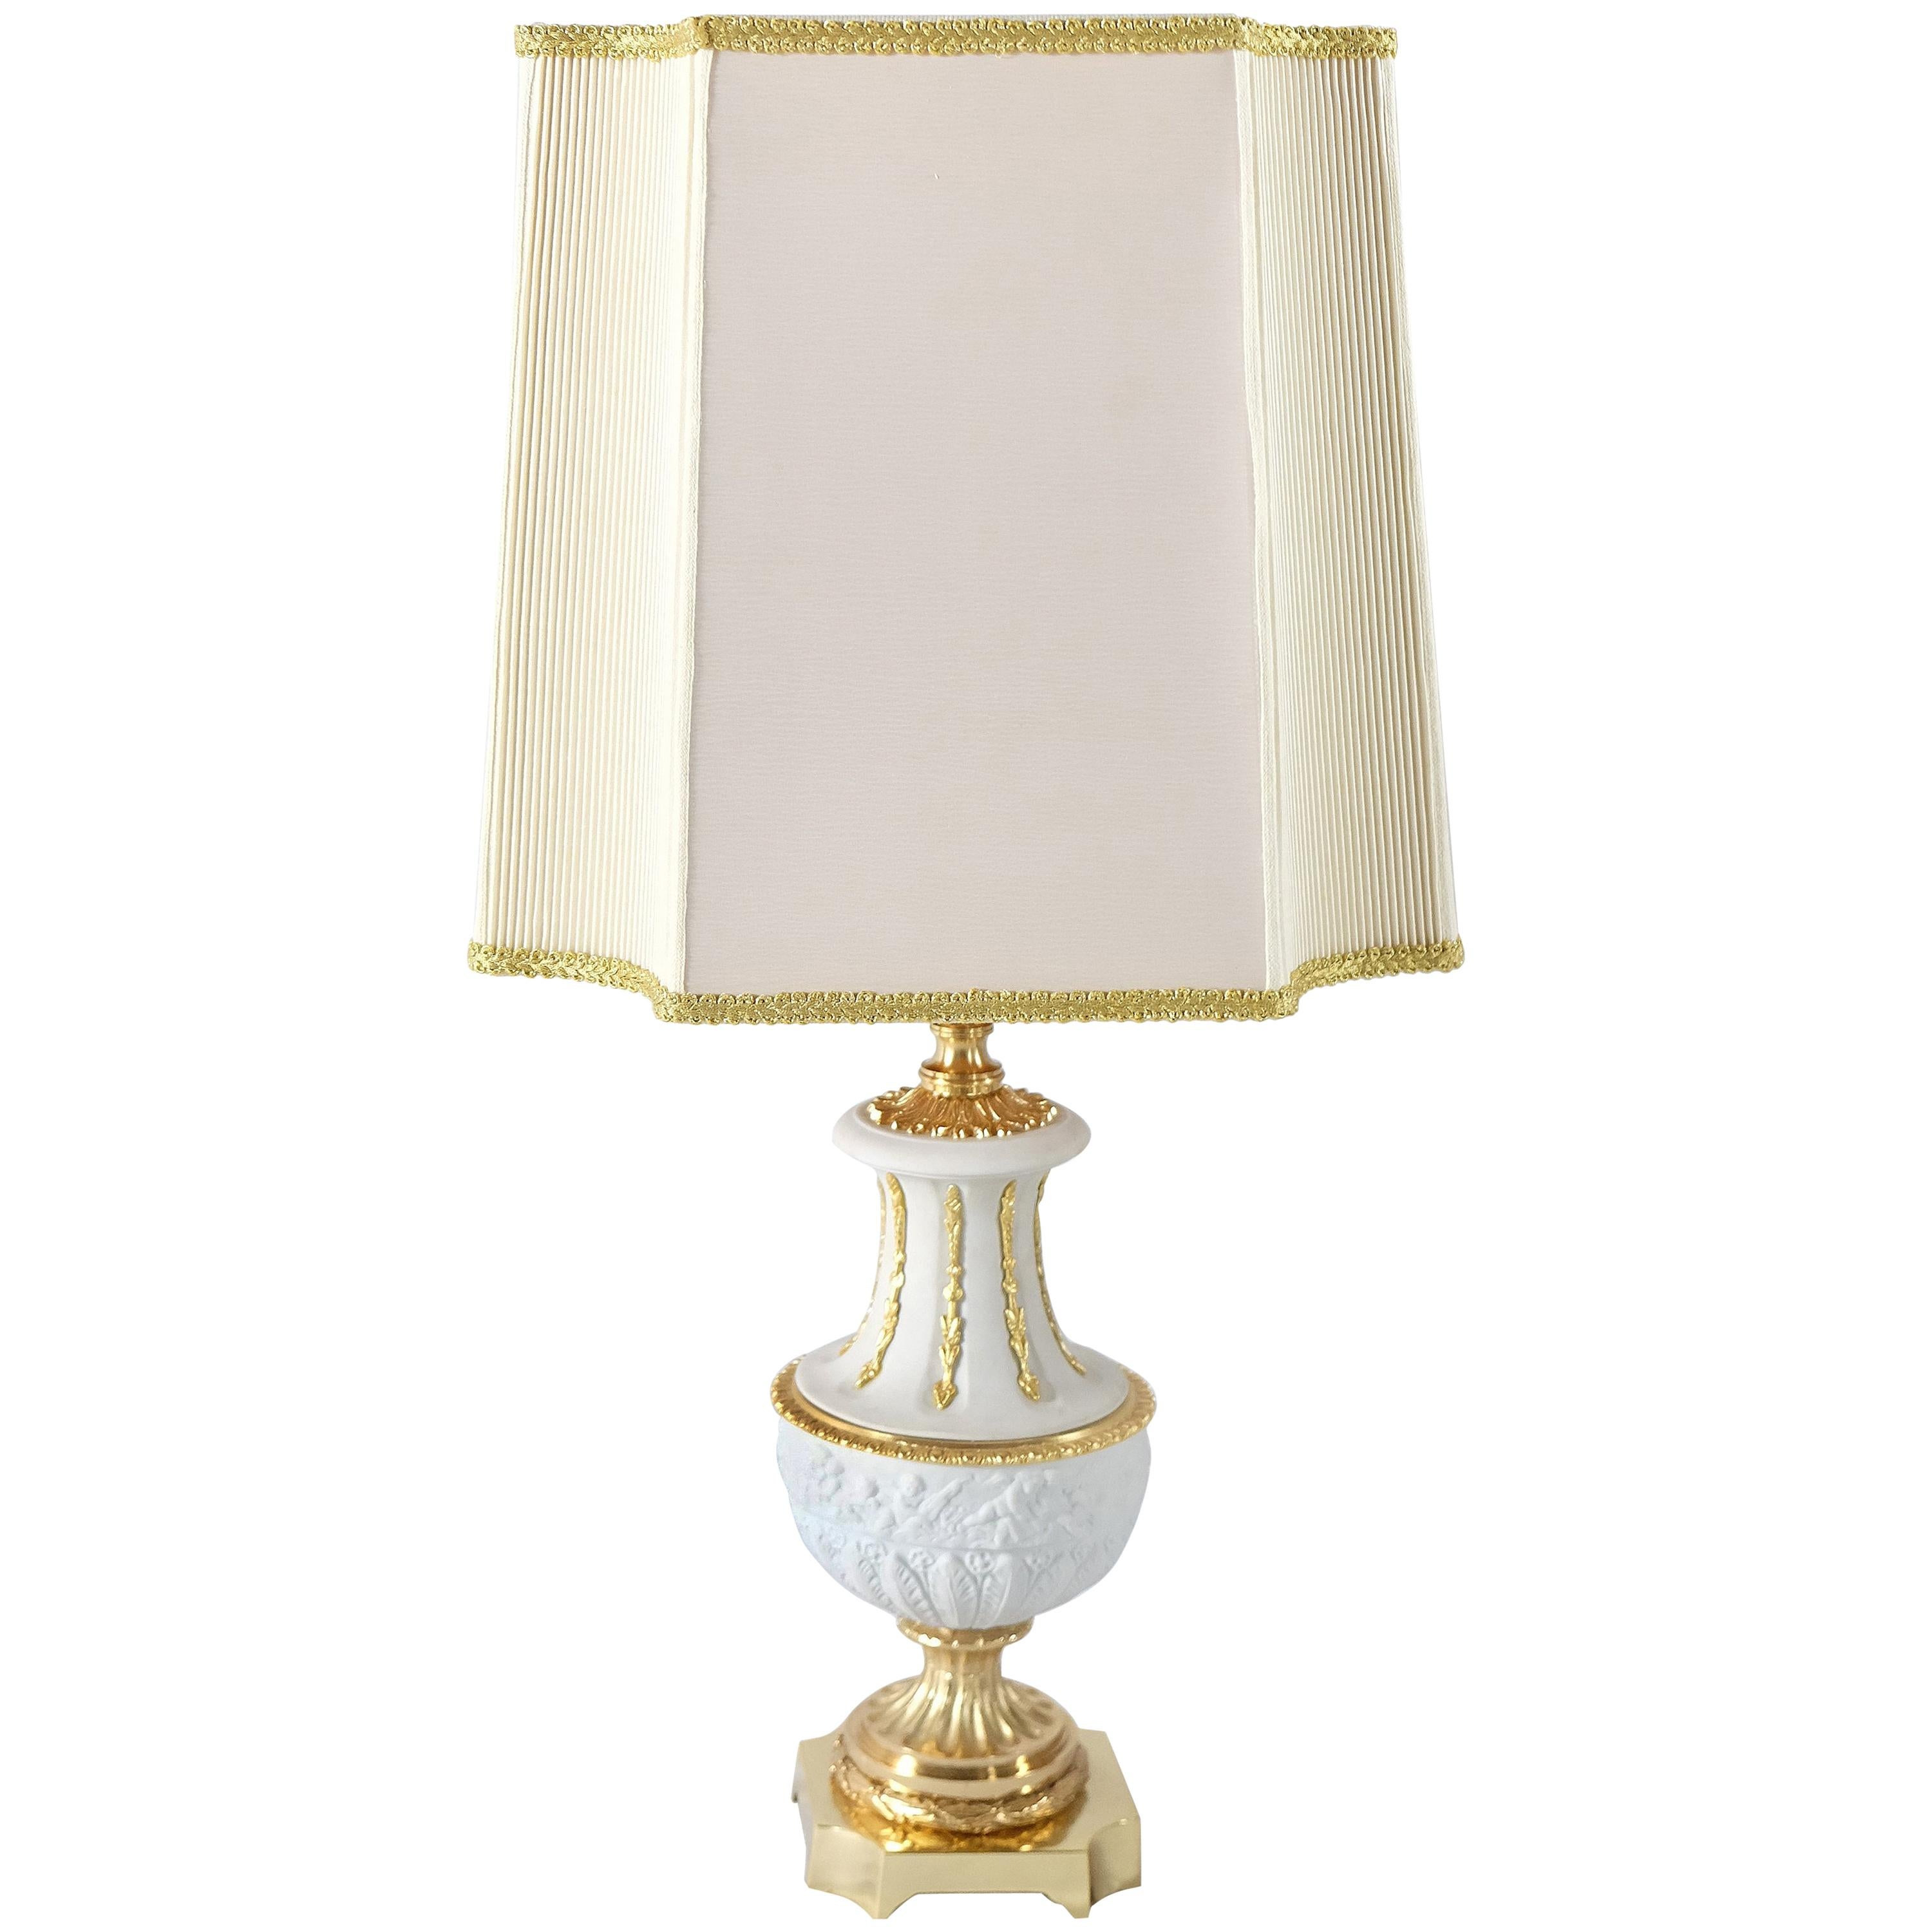 Mangani, Italy Classically Designed Porcelain Table Lamp 